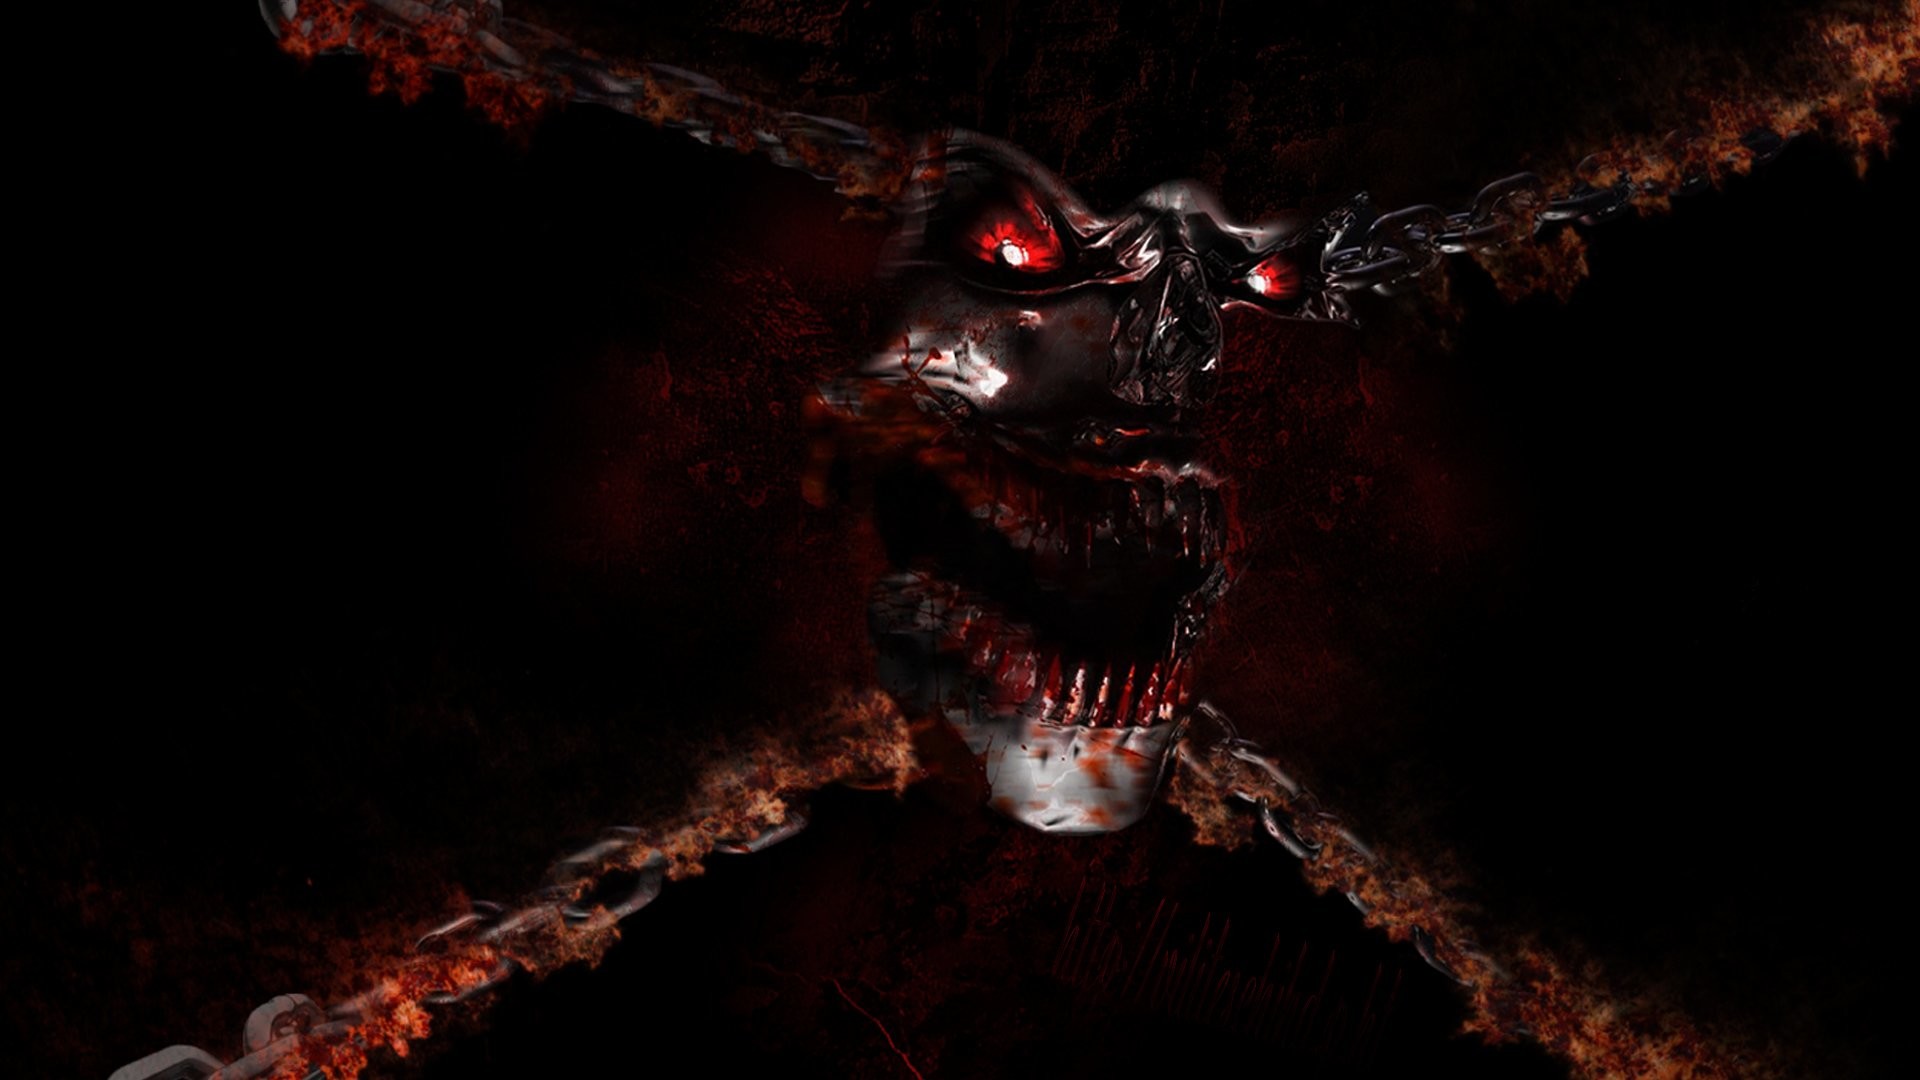 Dark – Creepy Skull Flame Blood Wallpaper